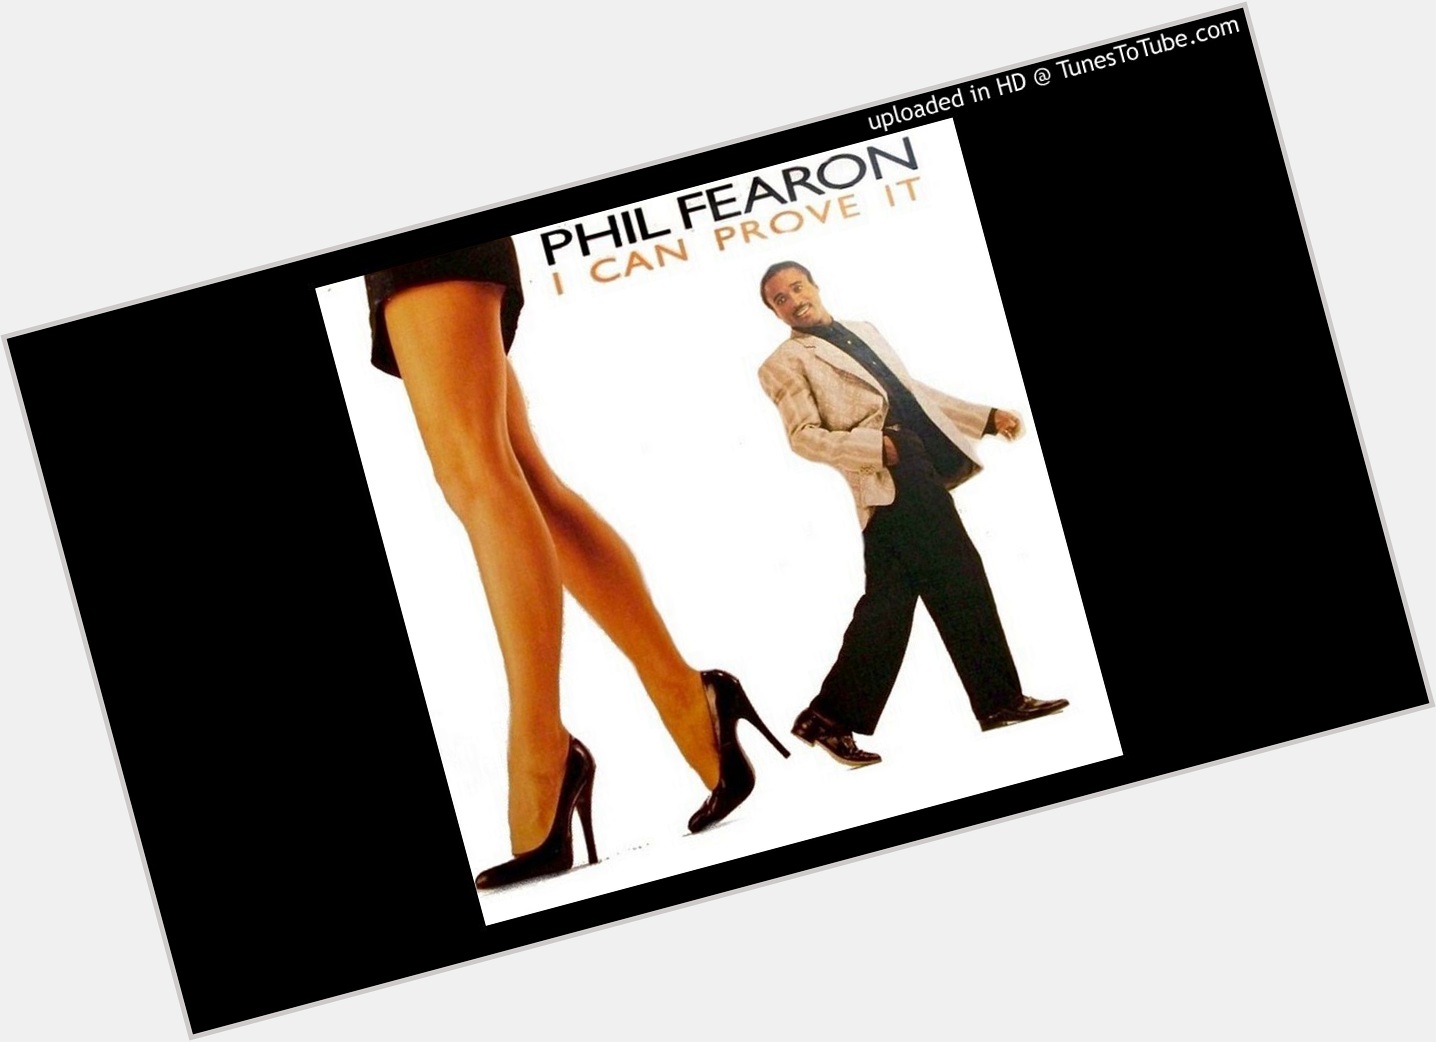 Phil Fearon sexy 2